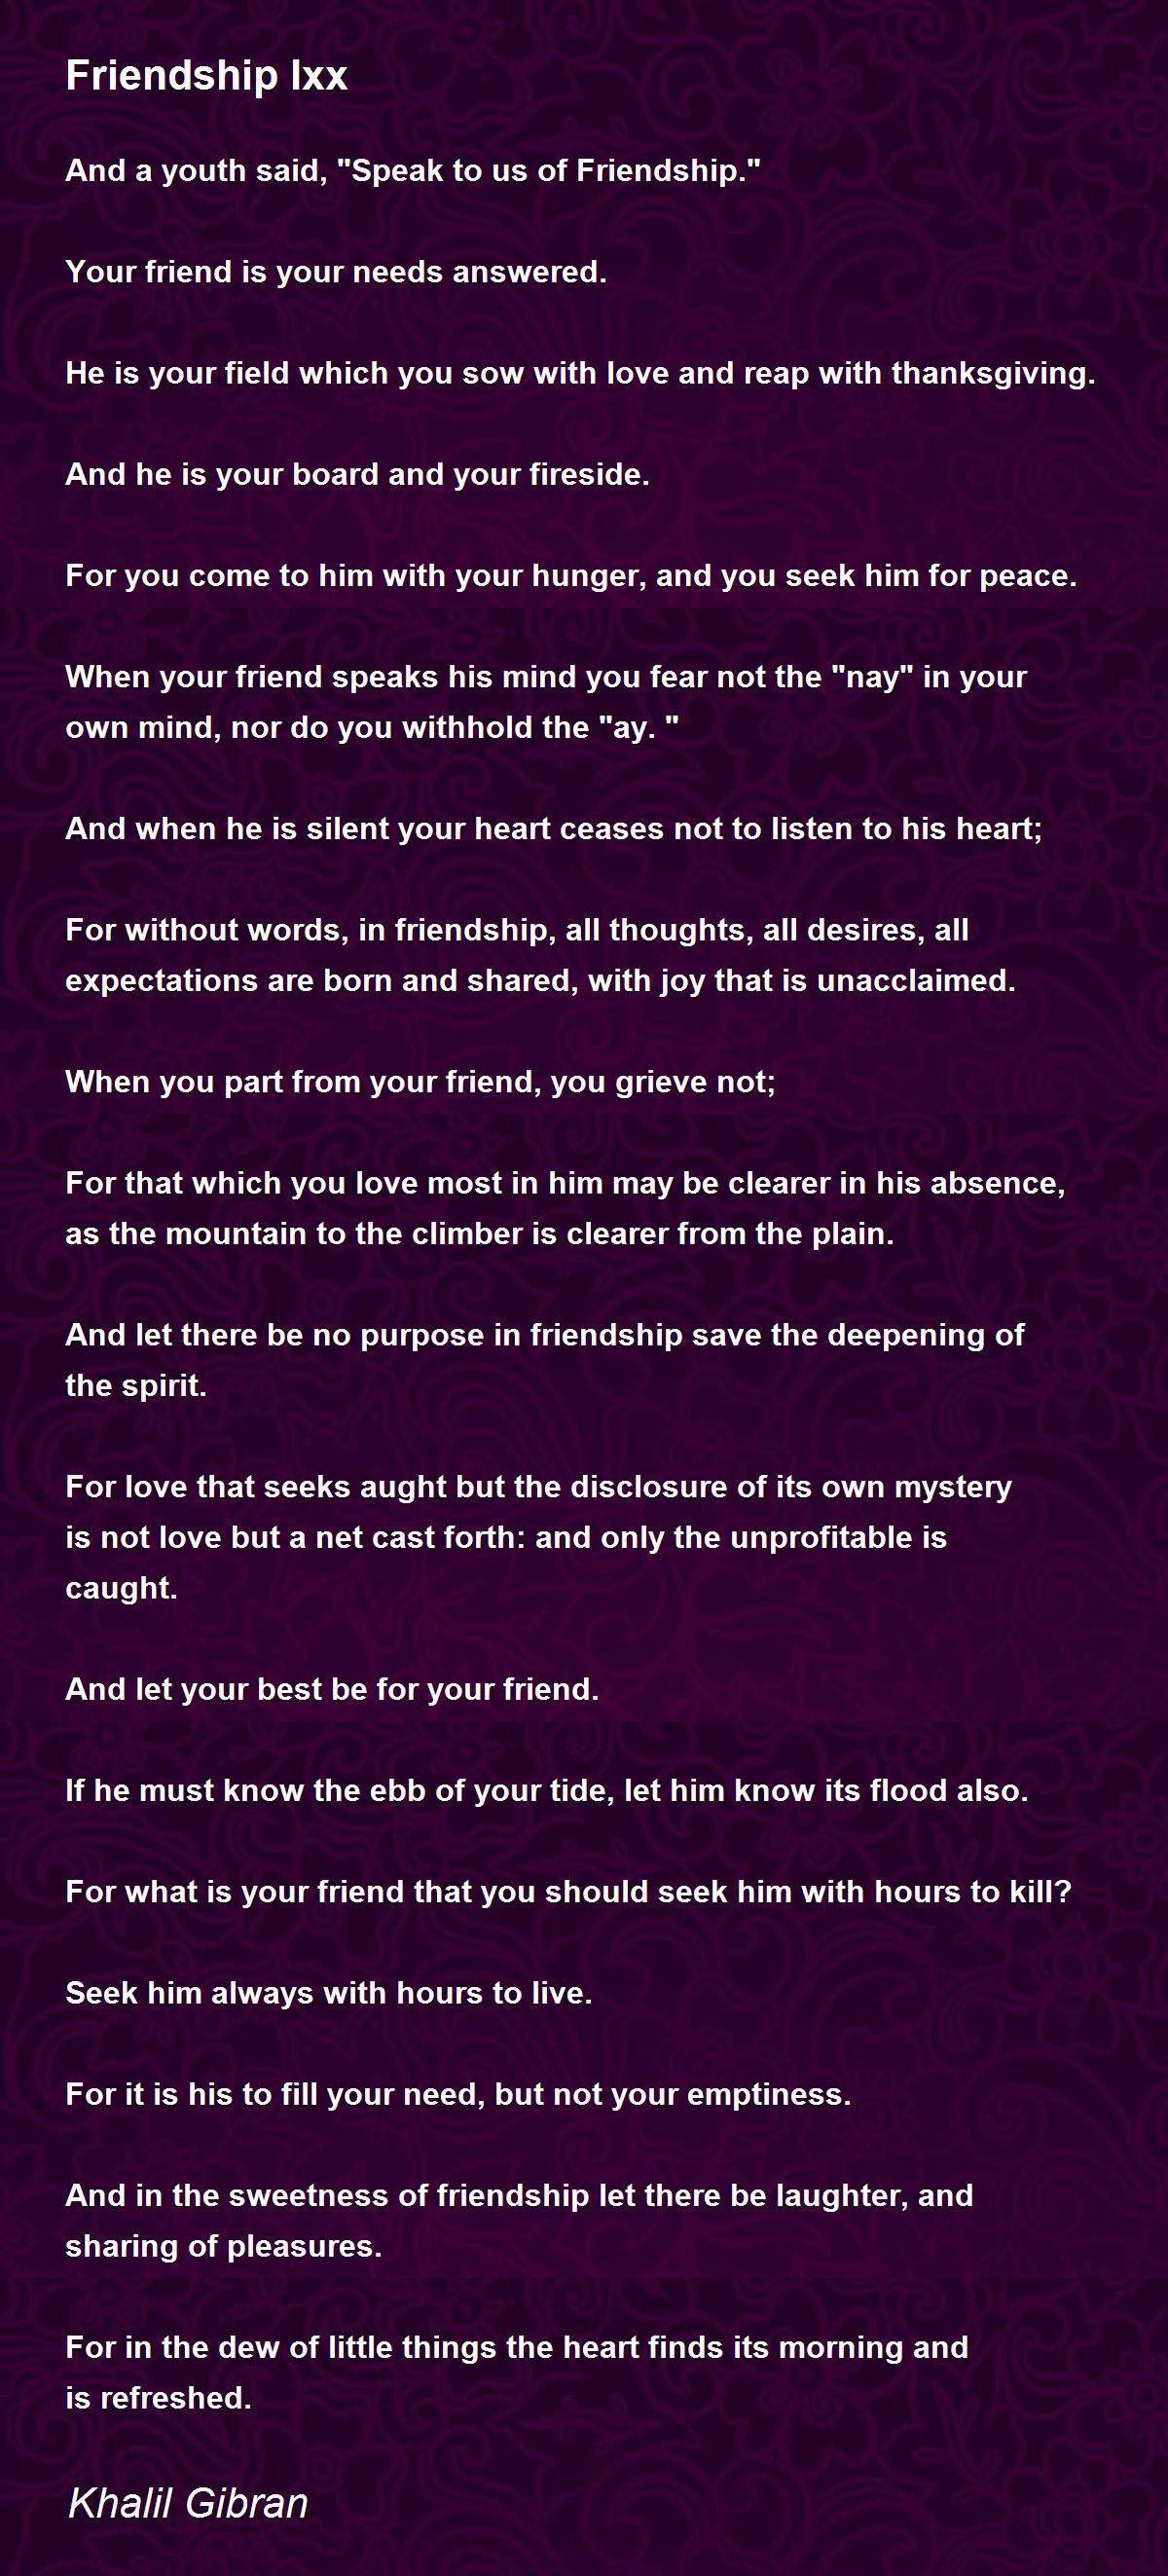 kahlil gibran poems on friendship